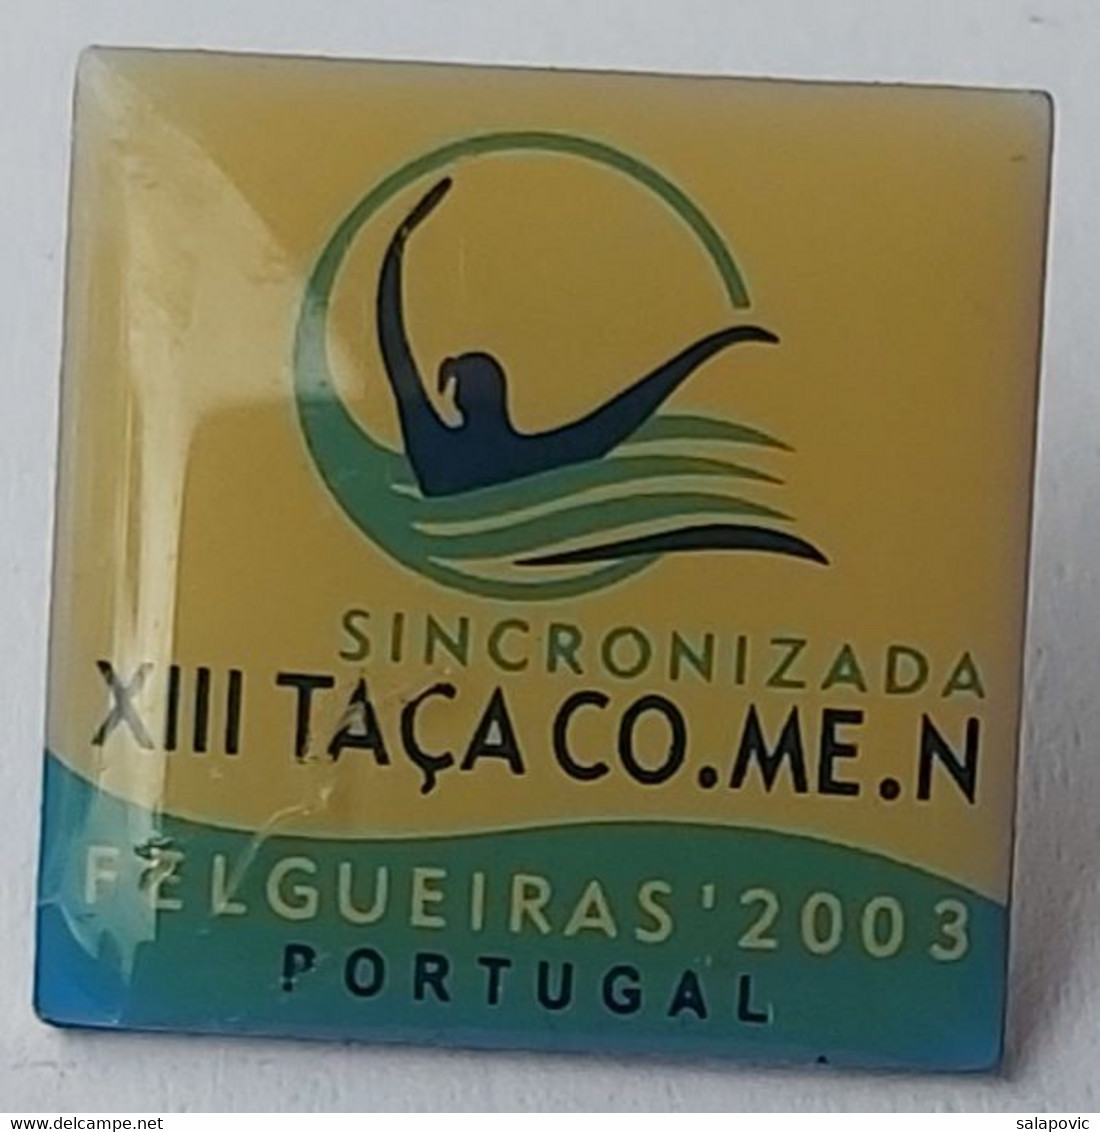 Sincronizada Felgueiras Portugal 2003 XIII Taça CO.ME. Synchronized Swimming PIN A6/9 - Swimming